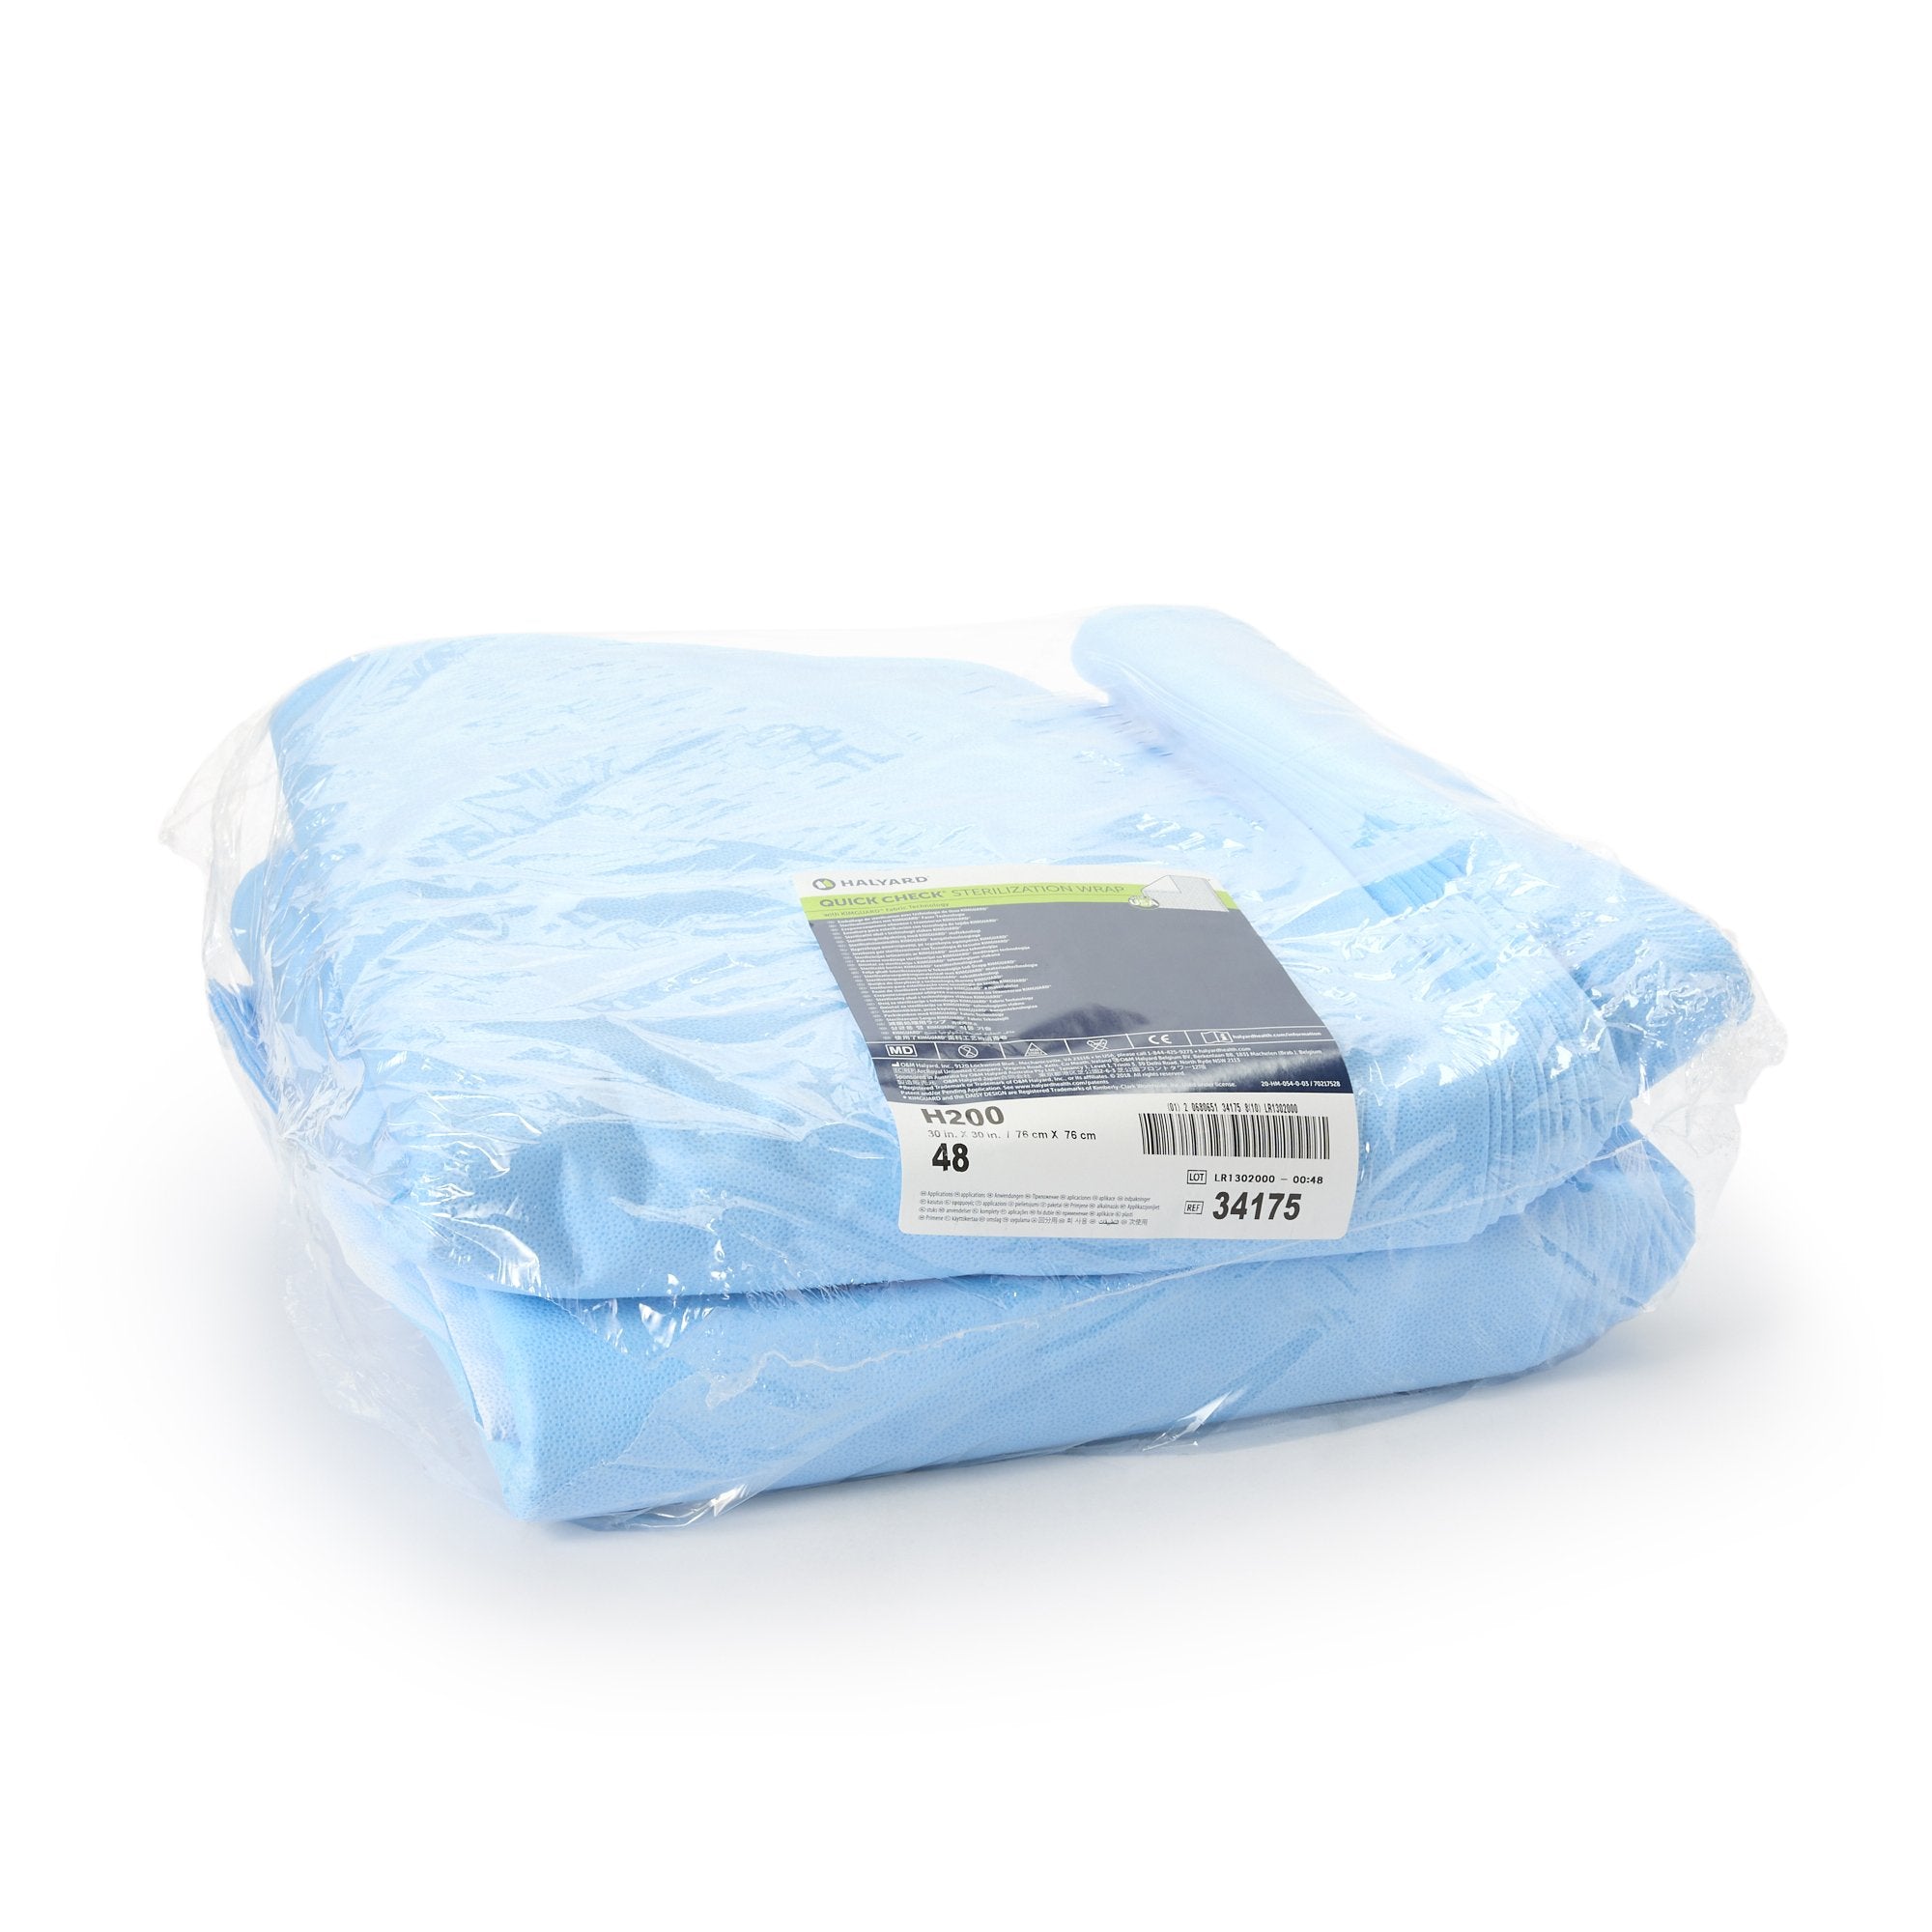 QUICK CHECK* H200 Sterilization Wrap White / Blue 30 X 30 Inch Dual Layer SMS Polypropylene Steam / EO Gas / Hydrogen Peroxide